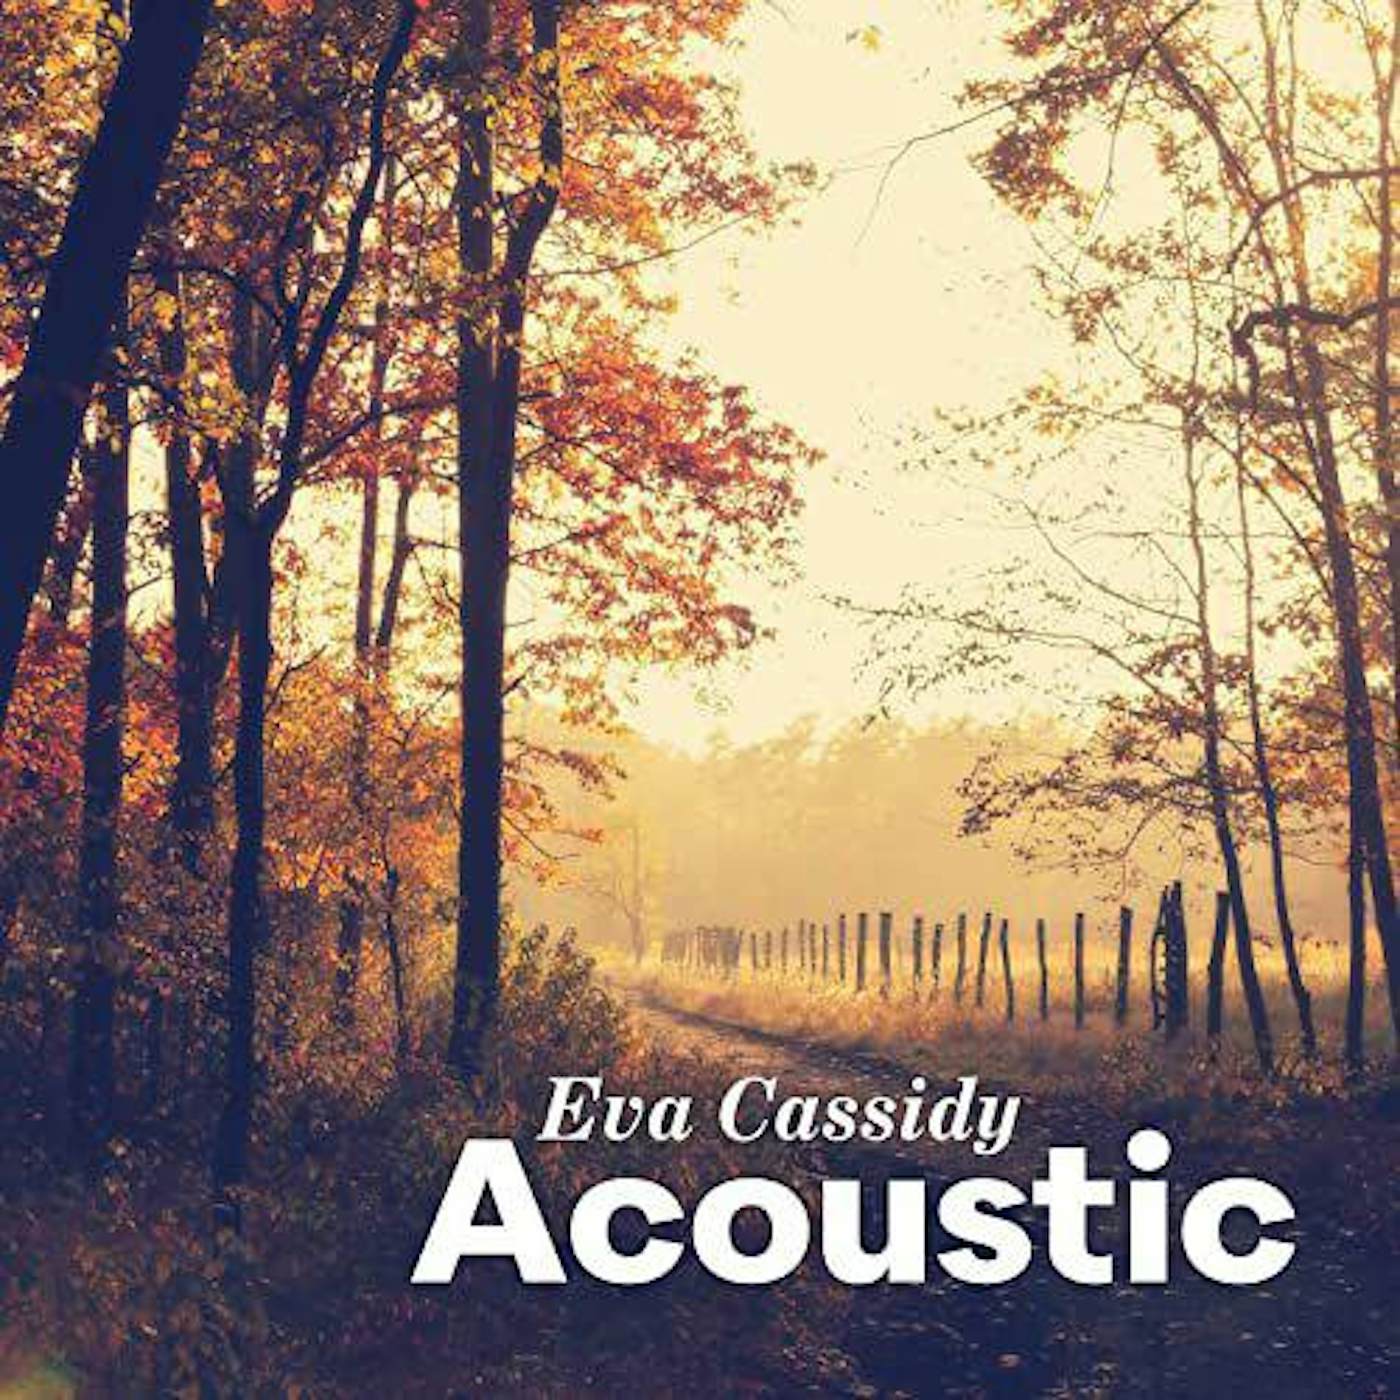 Eva Cassidy Acoustic Vinyl Record